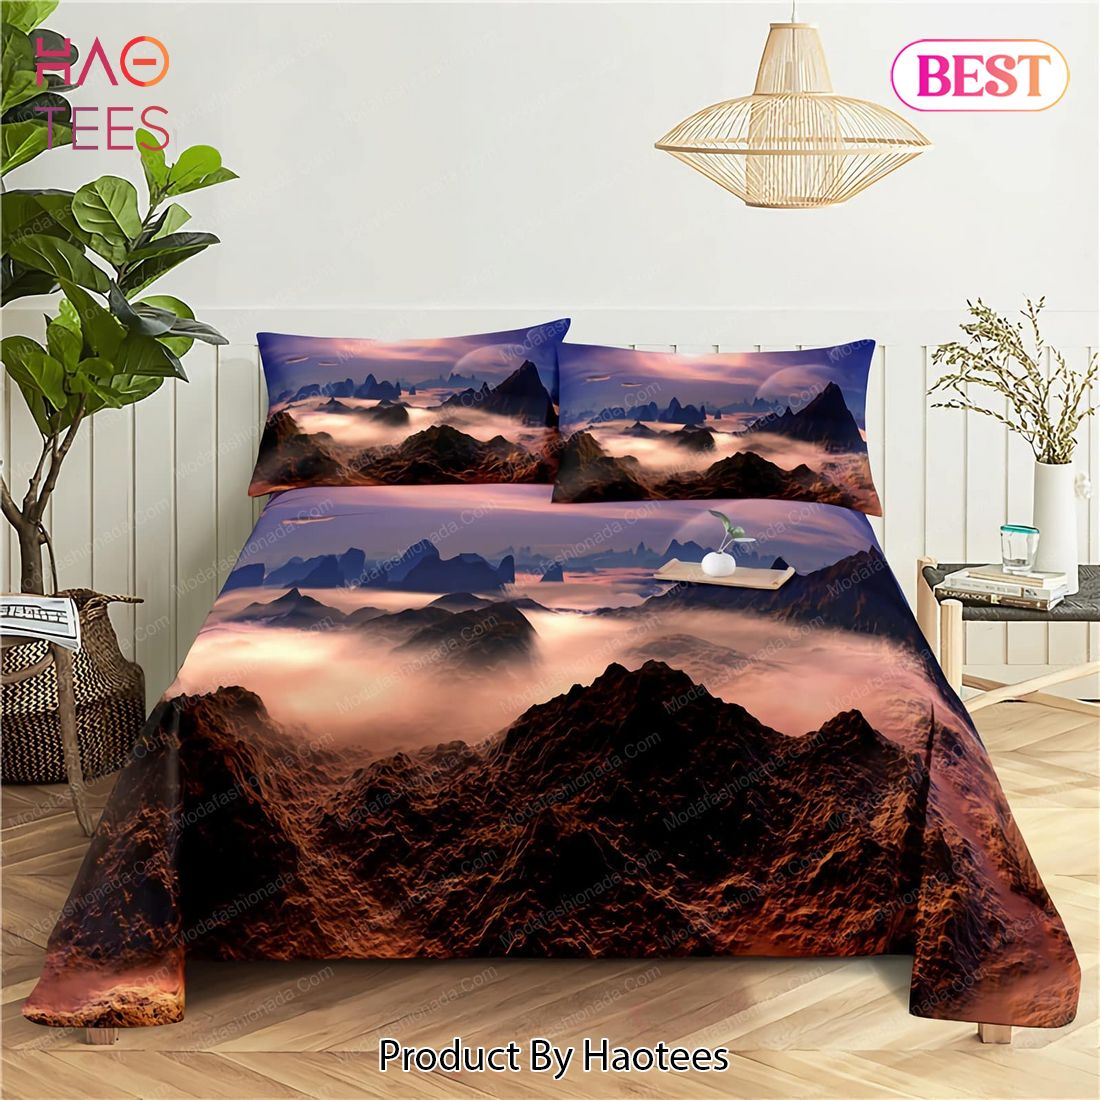 Buy Beautiful Mountain Scenery 270 Bedding Sets Bed Sets, Bedroom Sets, Comforter Sets, Duvet Cover, Bedspread